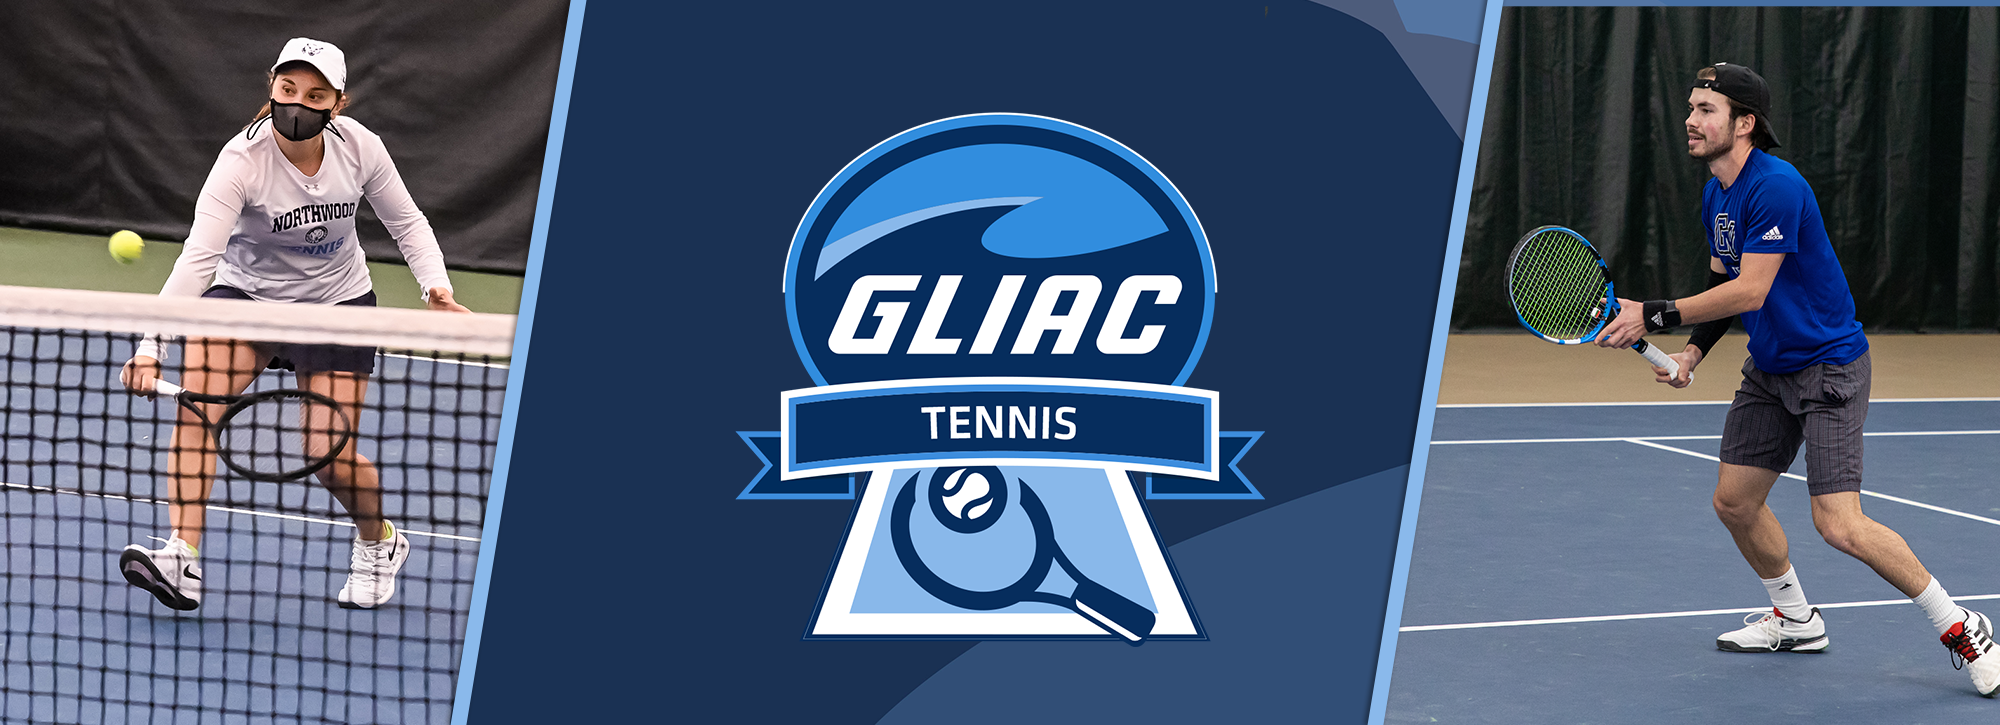 NU's Bandrowski, GVSU's Matov Earn GLIAC Tennis Player of the Week Honors